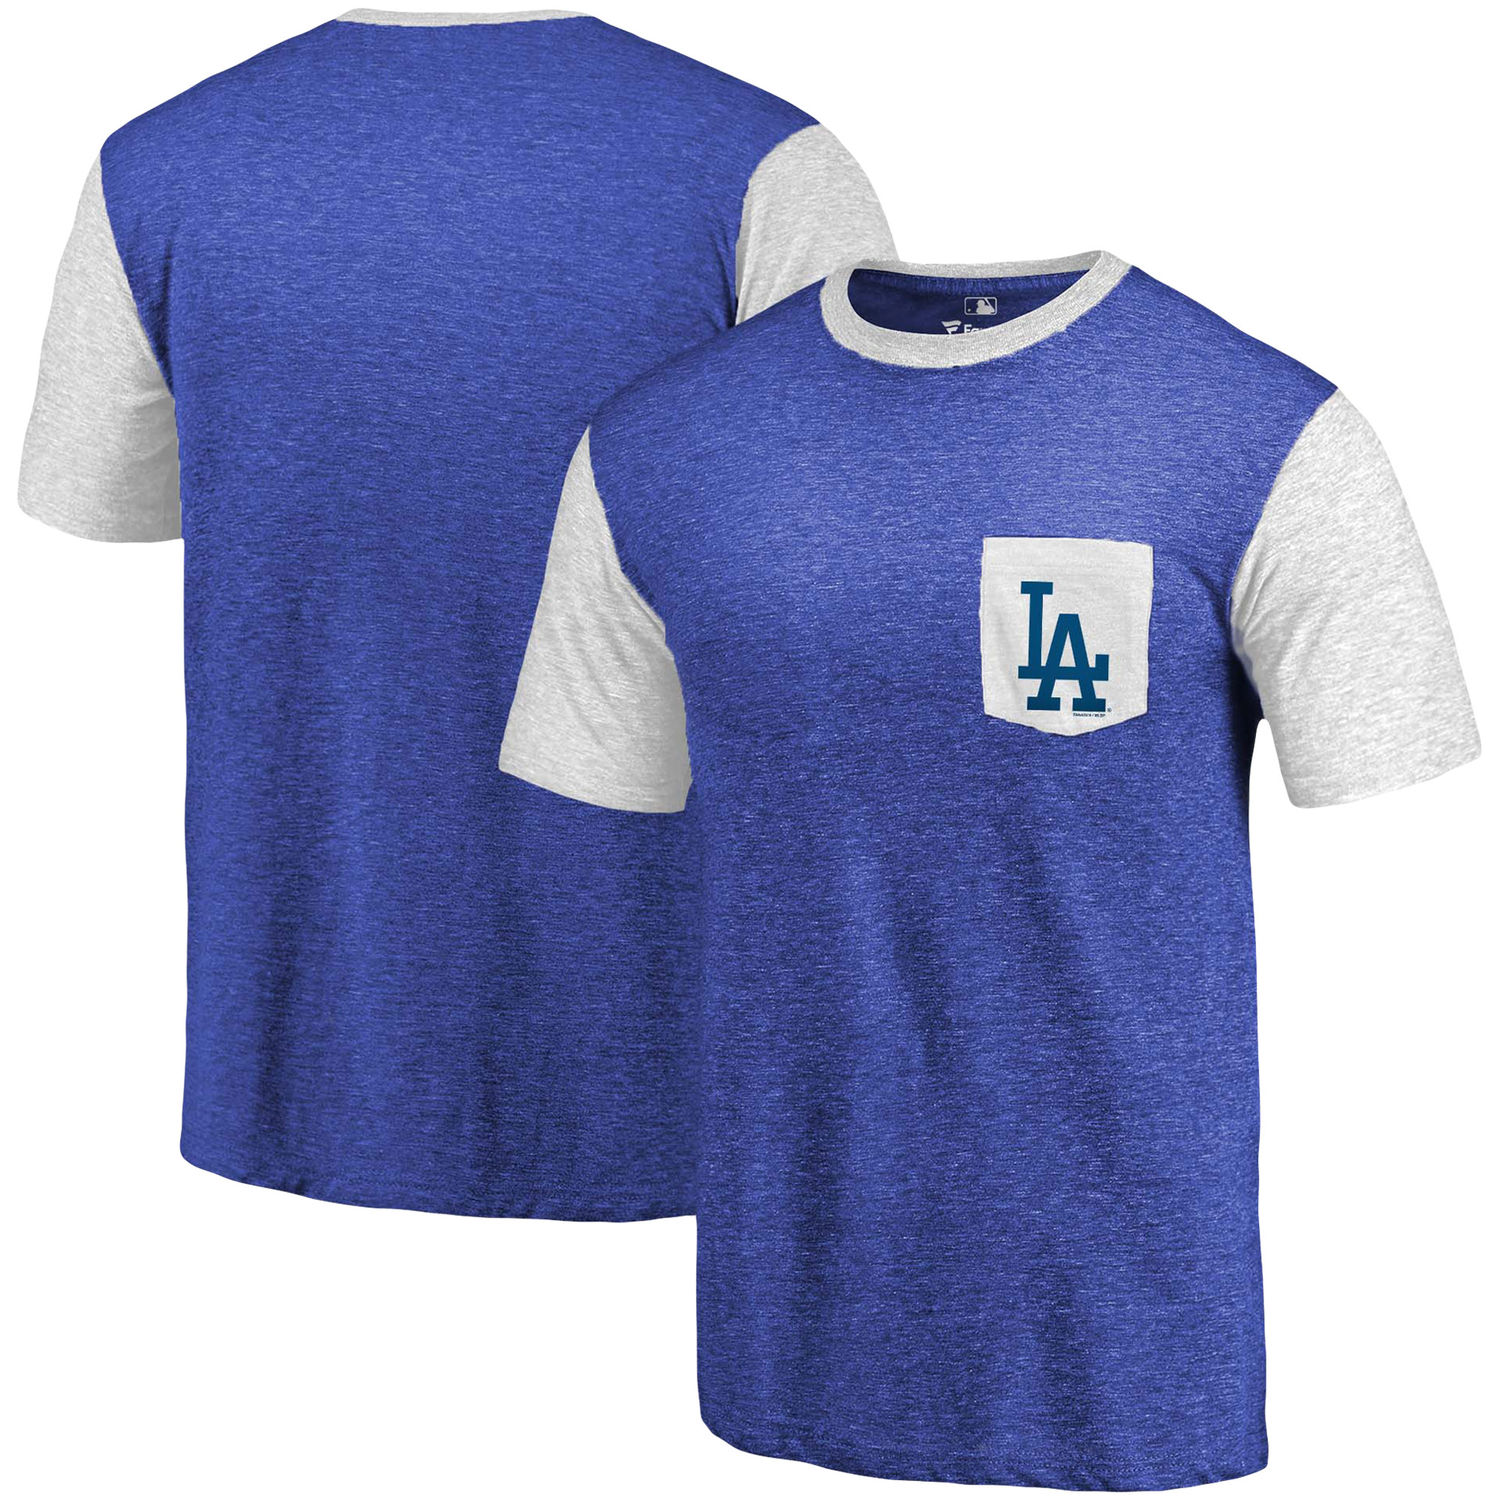 Men's Los Angeles Dodgers Fanatics Branded Royal-White Refresh Pocket T-Shirt